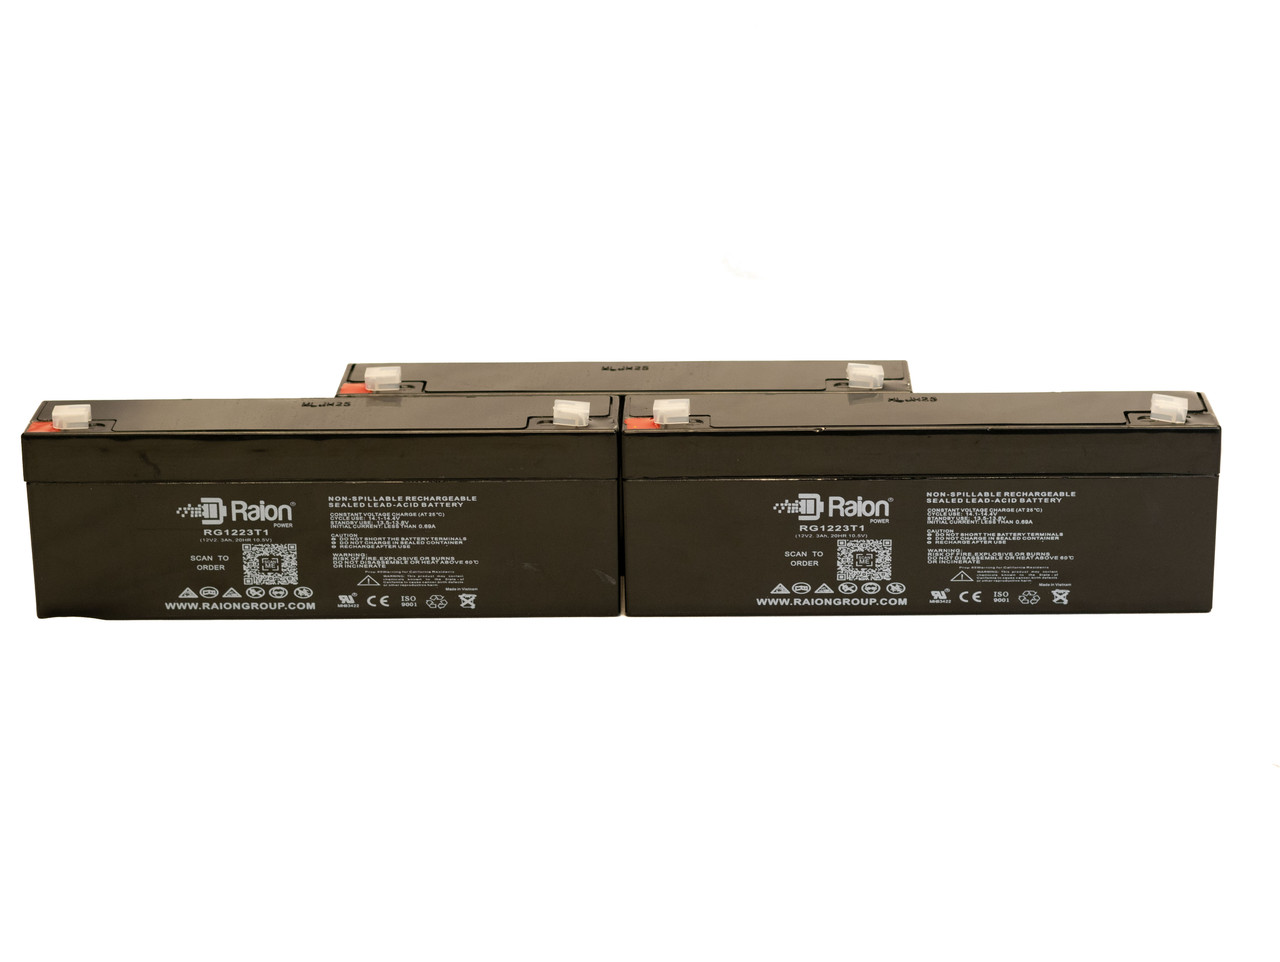 Raion Power 12V 2.3Ah RG1223T1 Compatible Replacement Battery for BatteryMart SLA-12V2-3 - 3 Pack